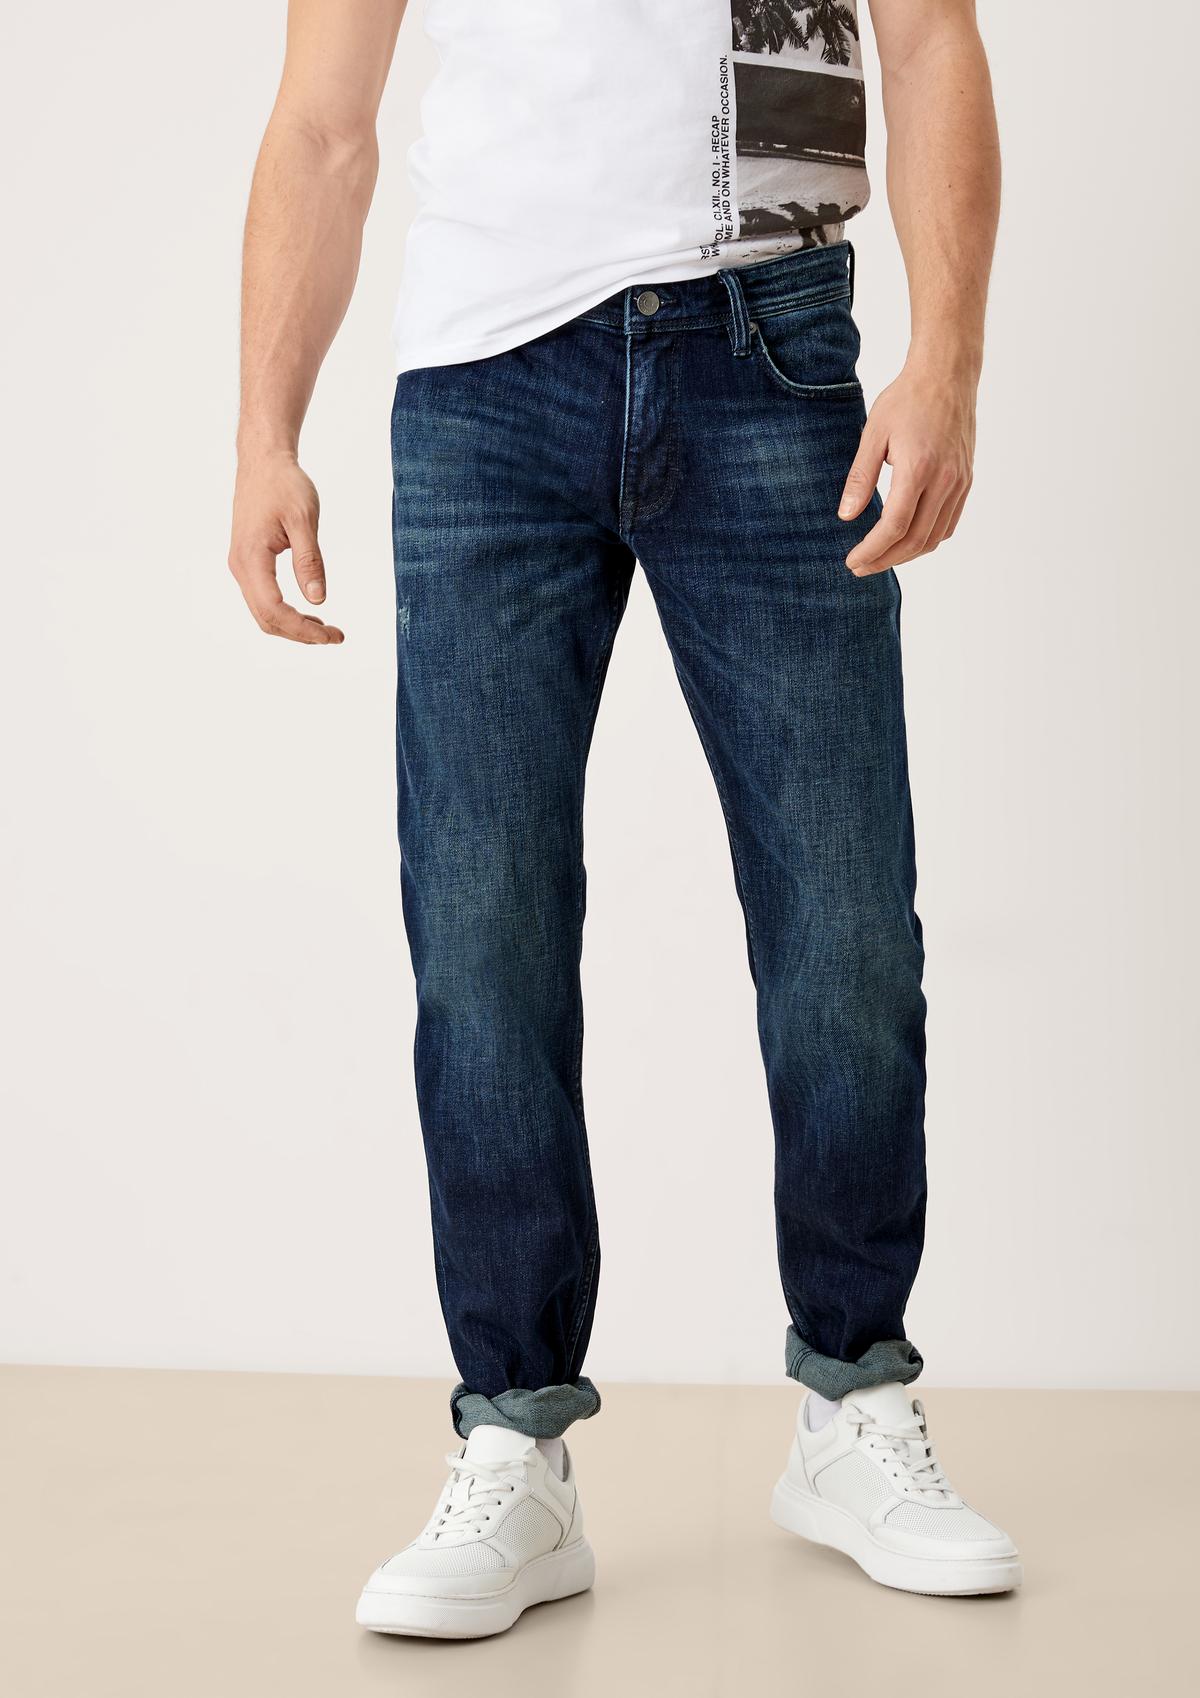 s.Oliver Slim fit: jeans with a vintage wash